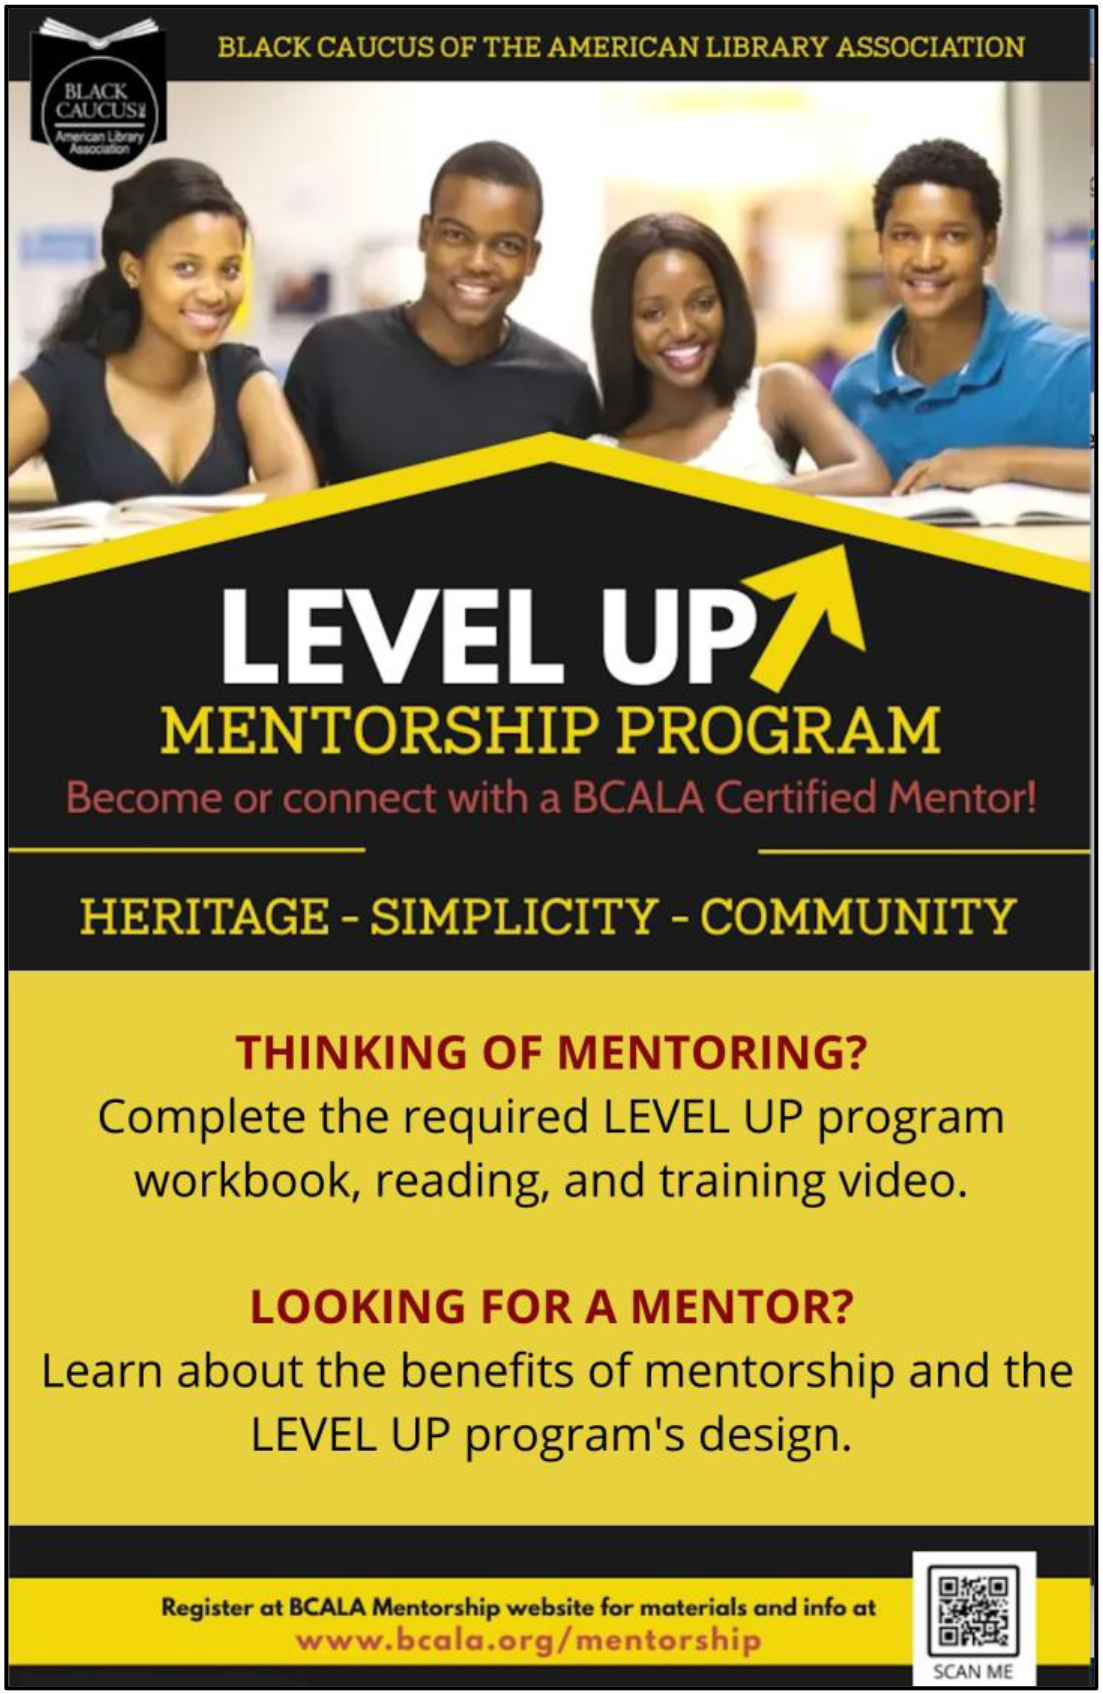 BCALA LEVEL UP mentorship program flyer.